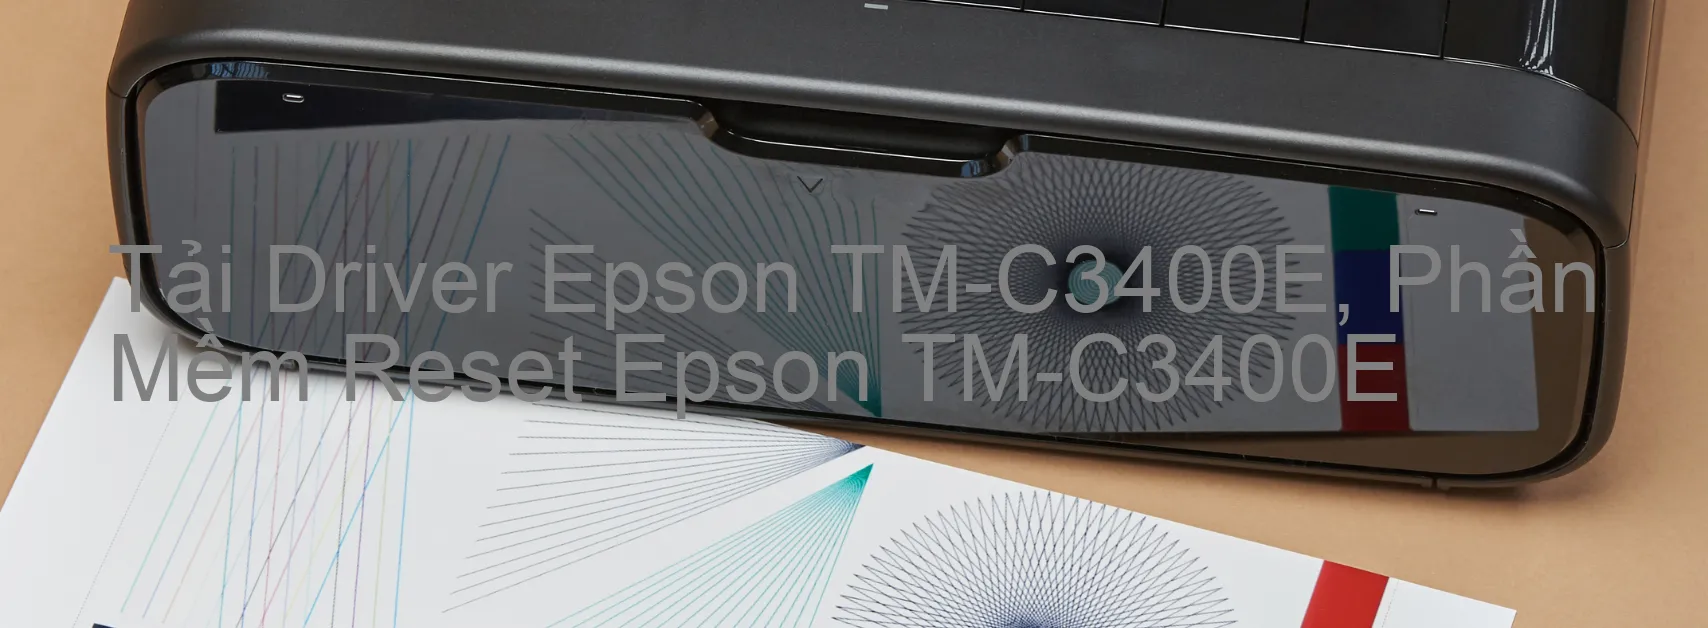 Driver Epson TM-C3400E, Phần Mềm Reset Epson TM-C3400E